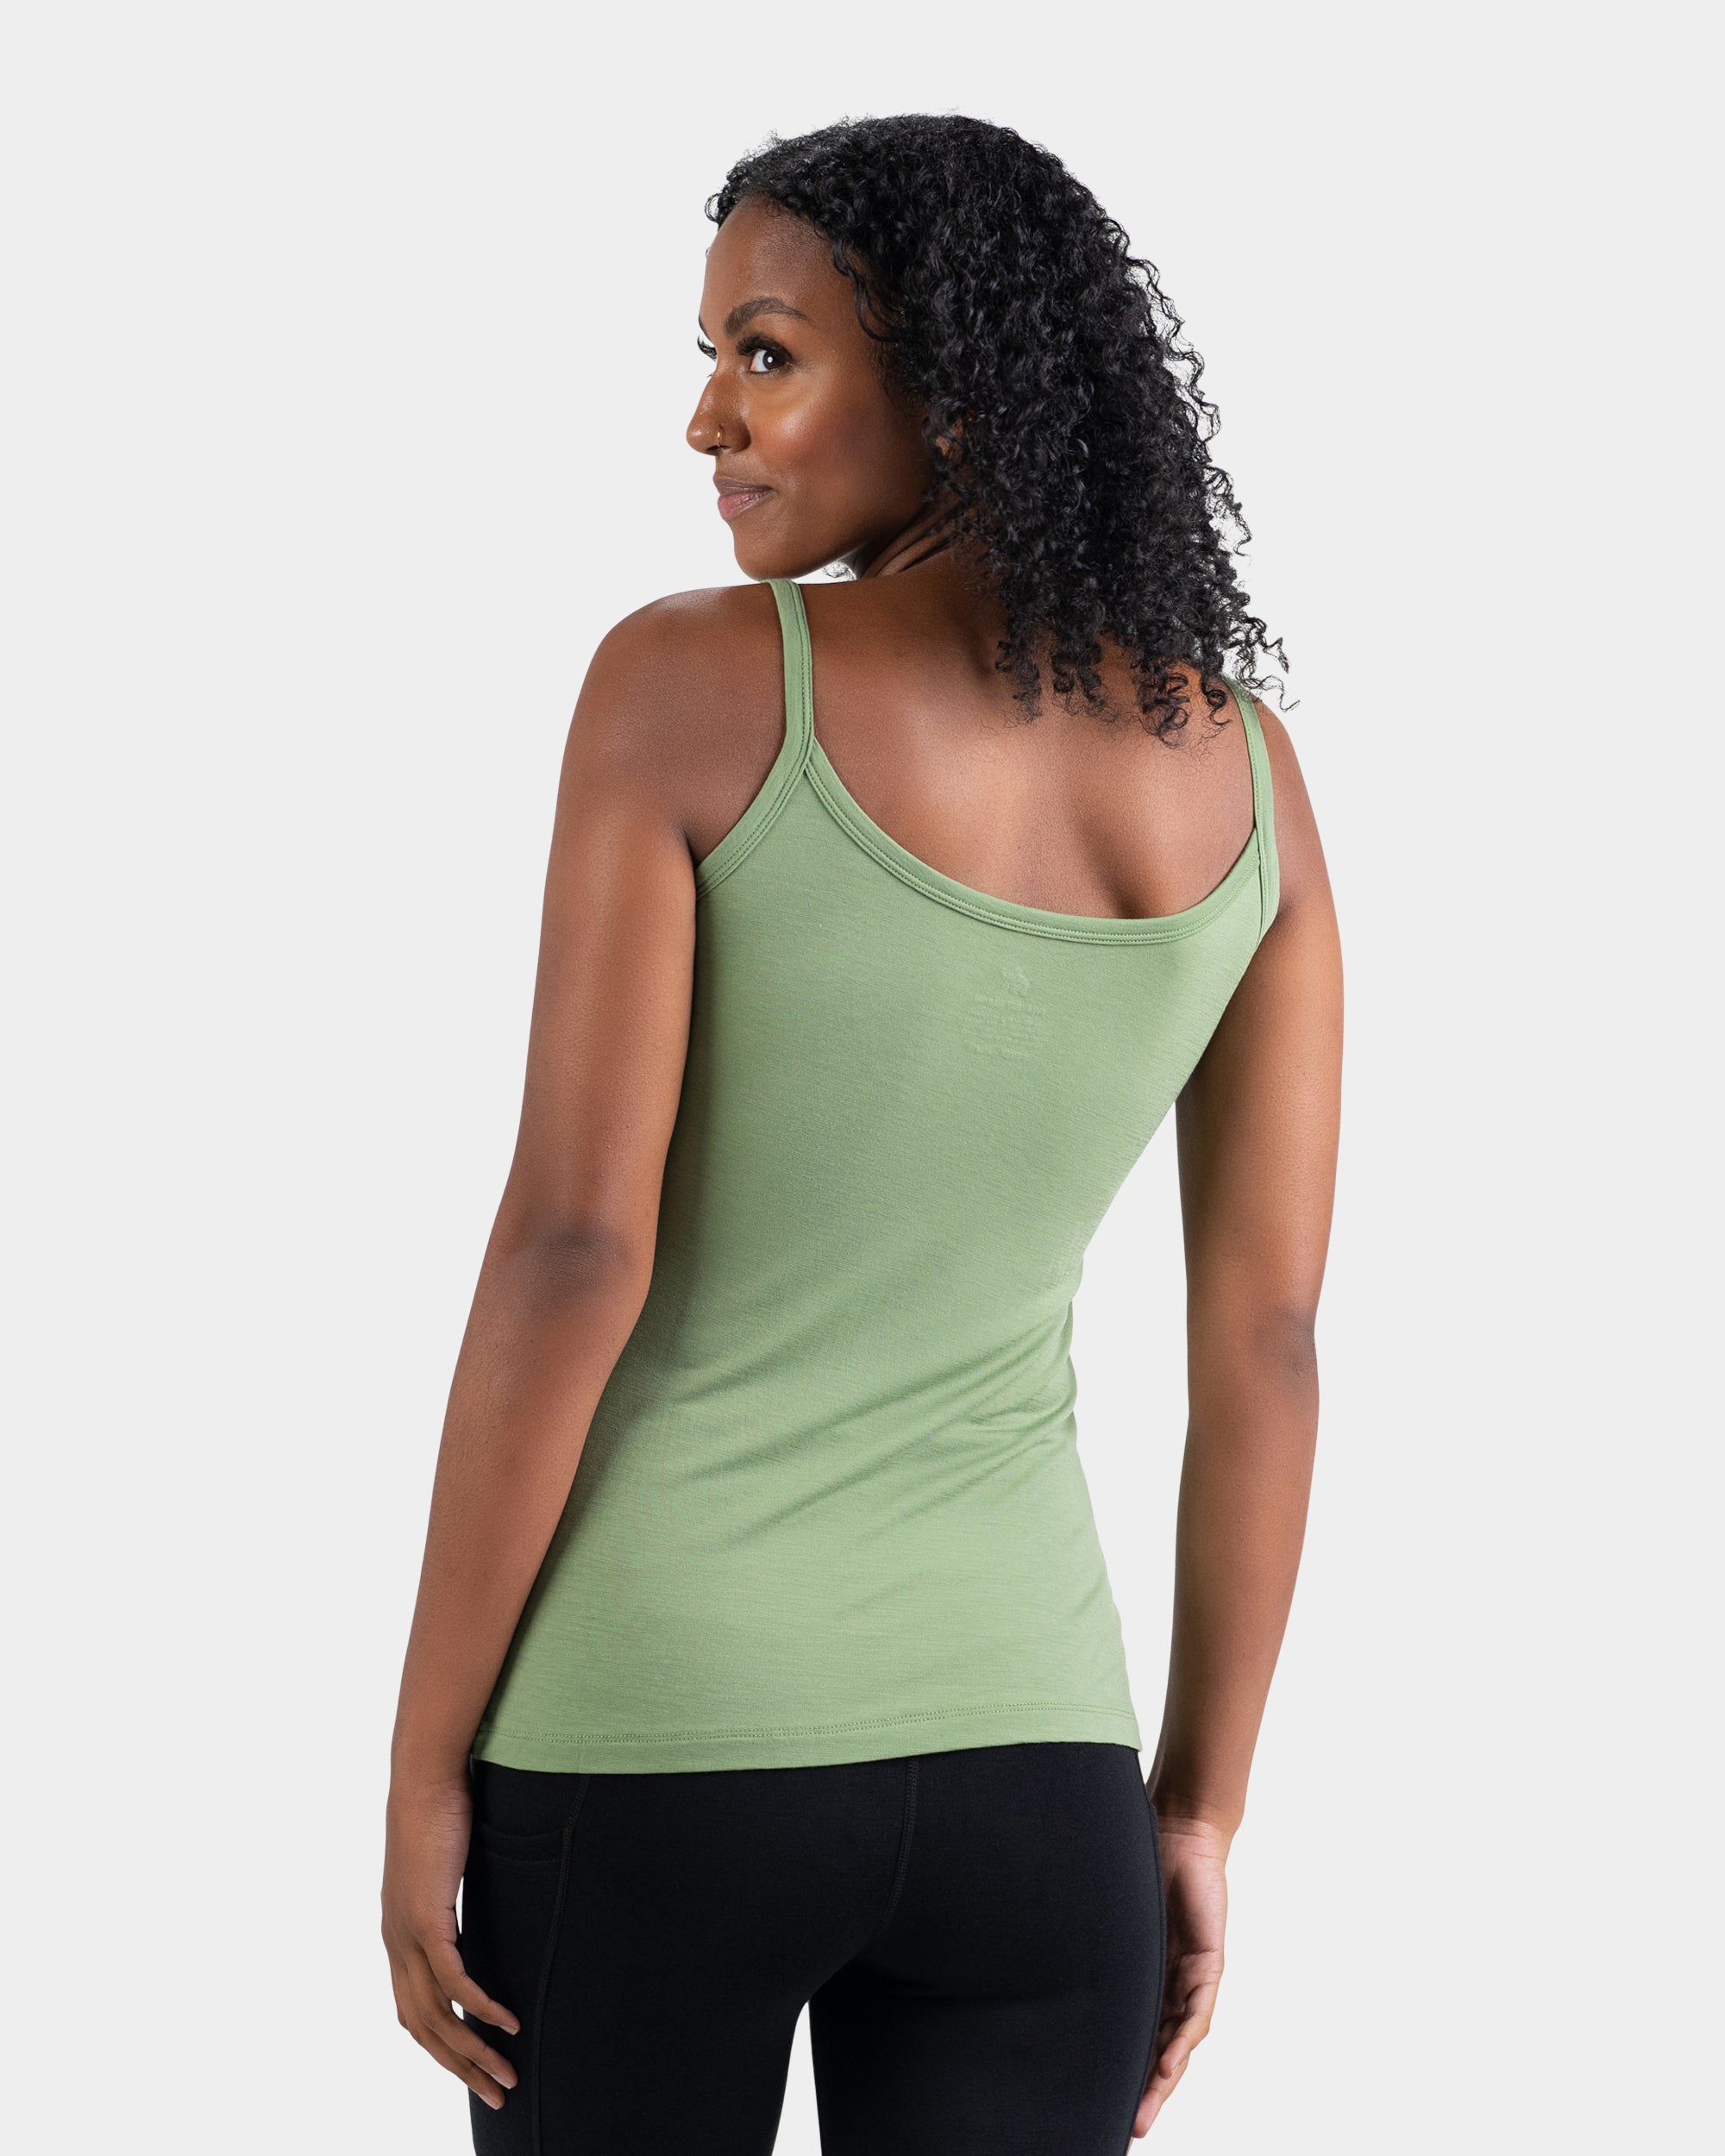 Everyday Yoga Women Tank Sleeveless Shirt Skin-Friendly Fabric